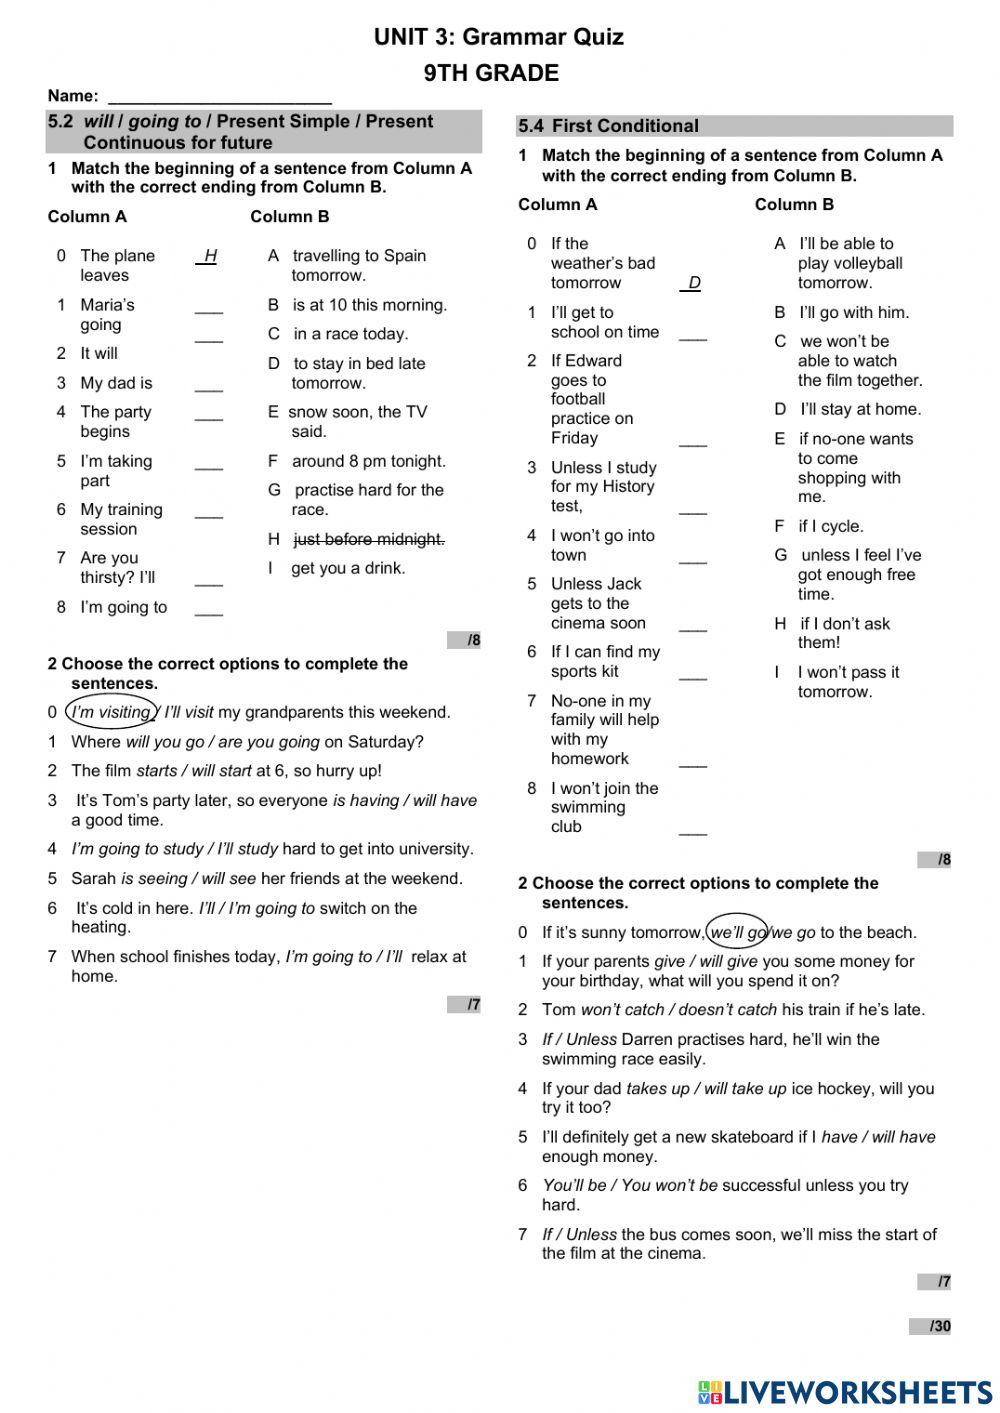 9th grade - grammar quiz